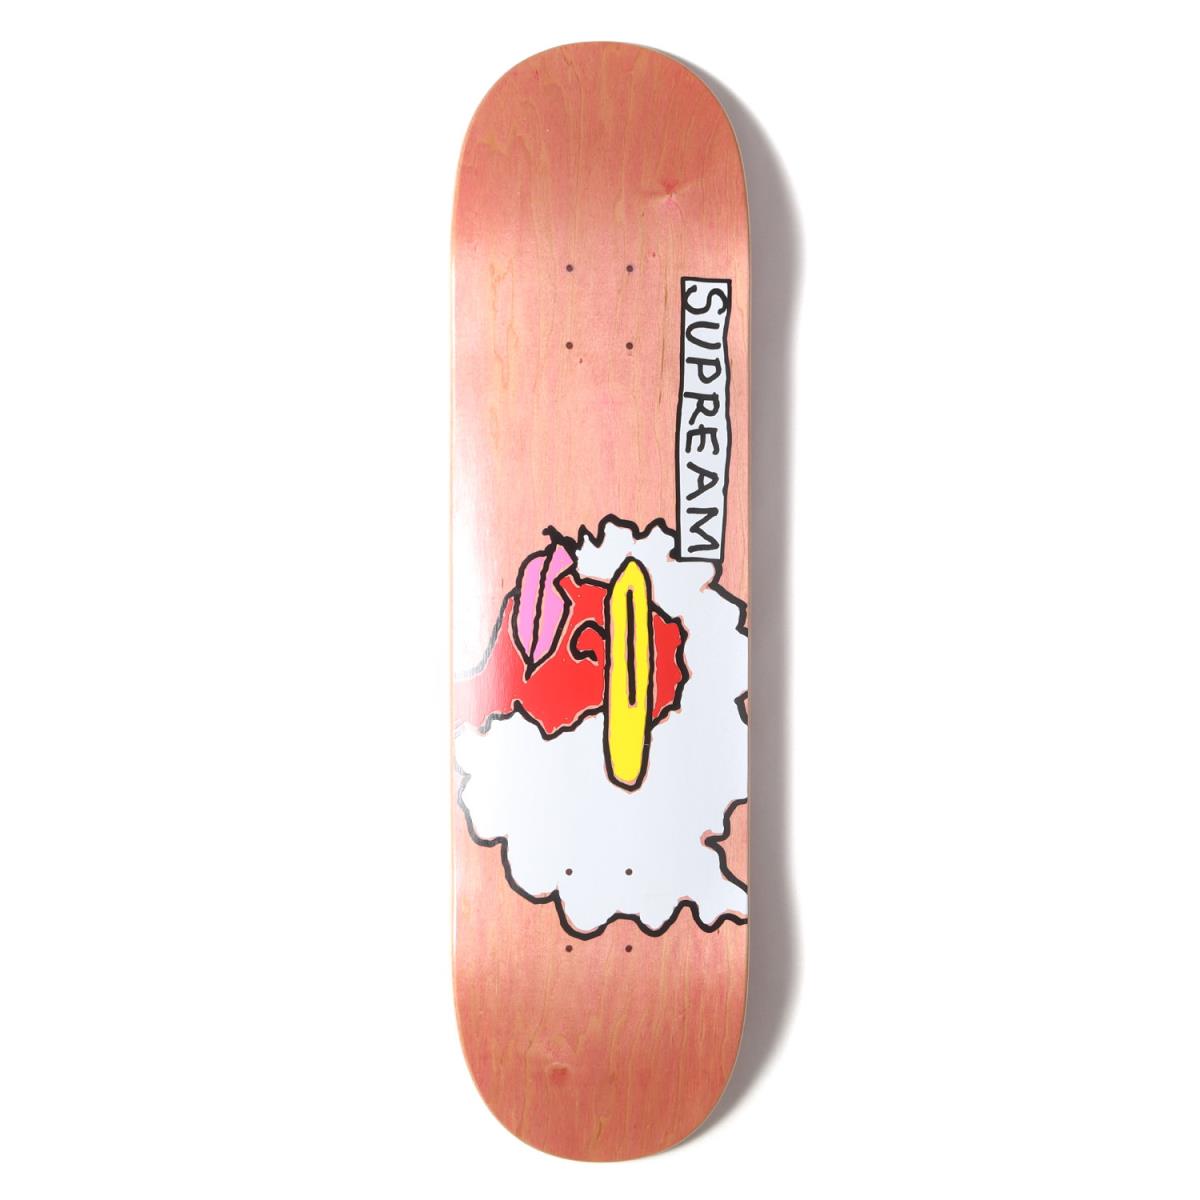 Supreme シュプリーム ゴンズキャラクタースケボーデッキ Gonz Ramm Skateboard パープル ピンク スケートボード  【メンズ】【中古】【K3113】 | ブランド古着のBEEGLE by Boo-Bee